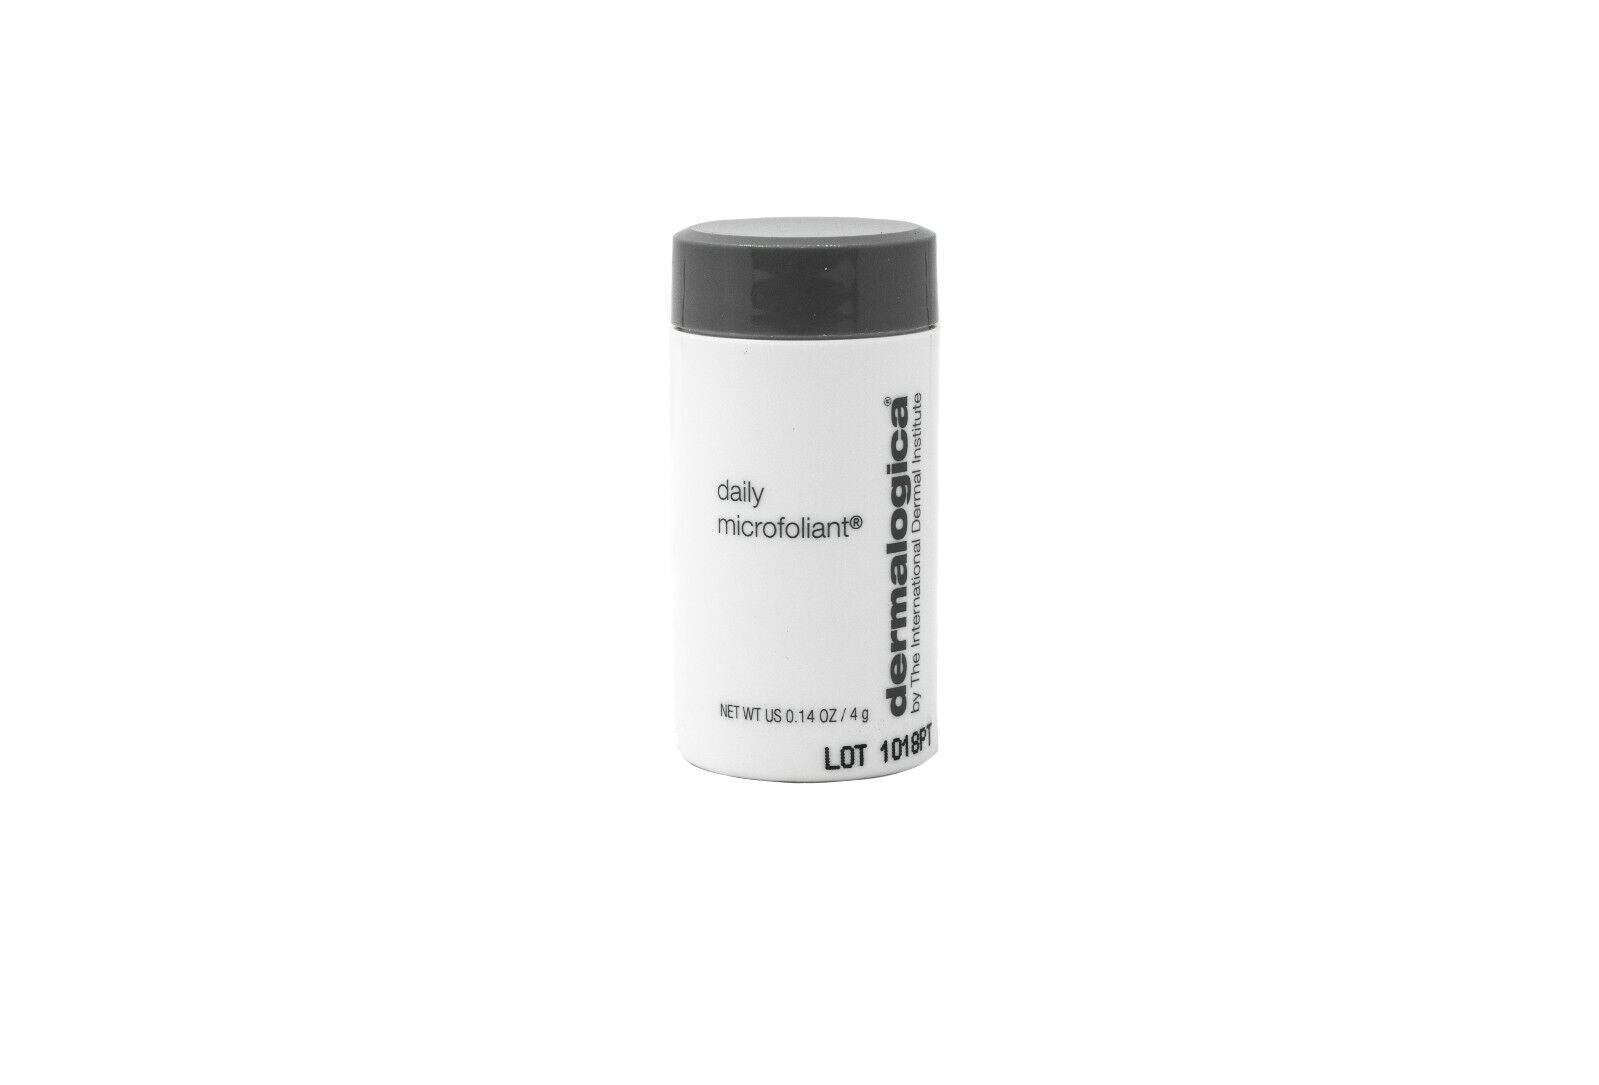 Daily Superfoliant Resurfacing Charcoalbesed Powder Exfoliant Trial Size - 4 g